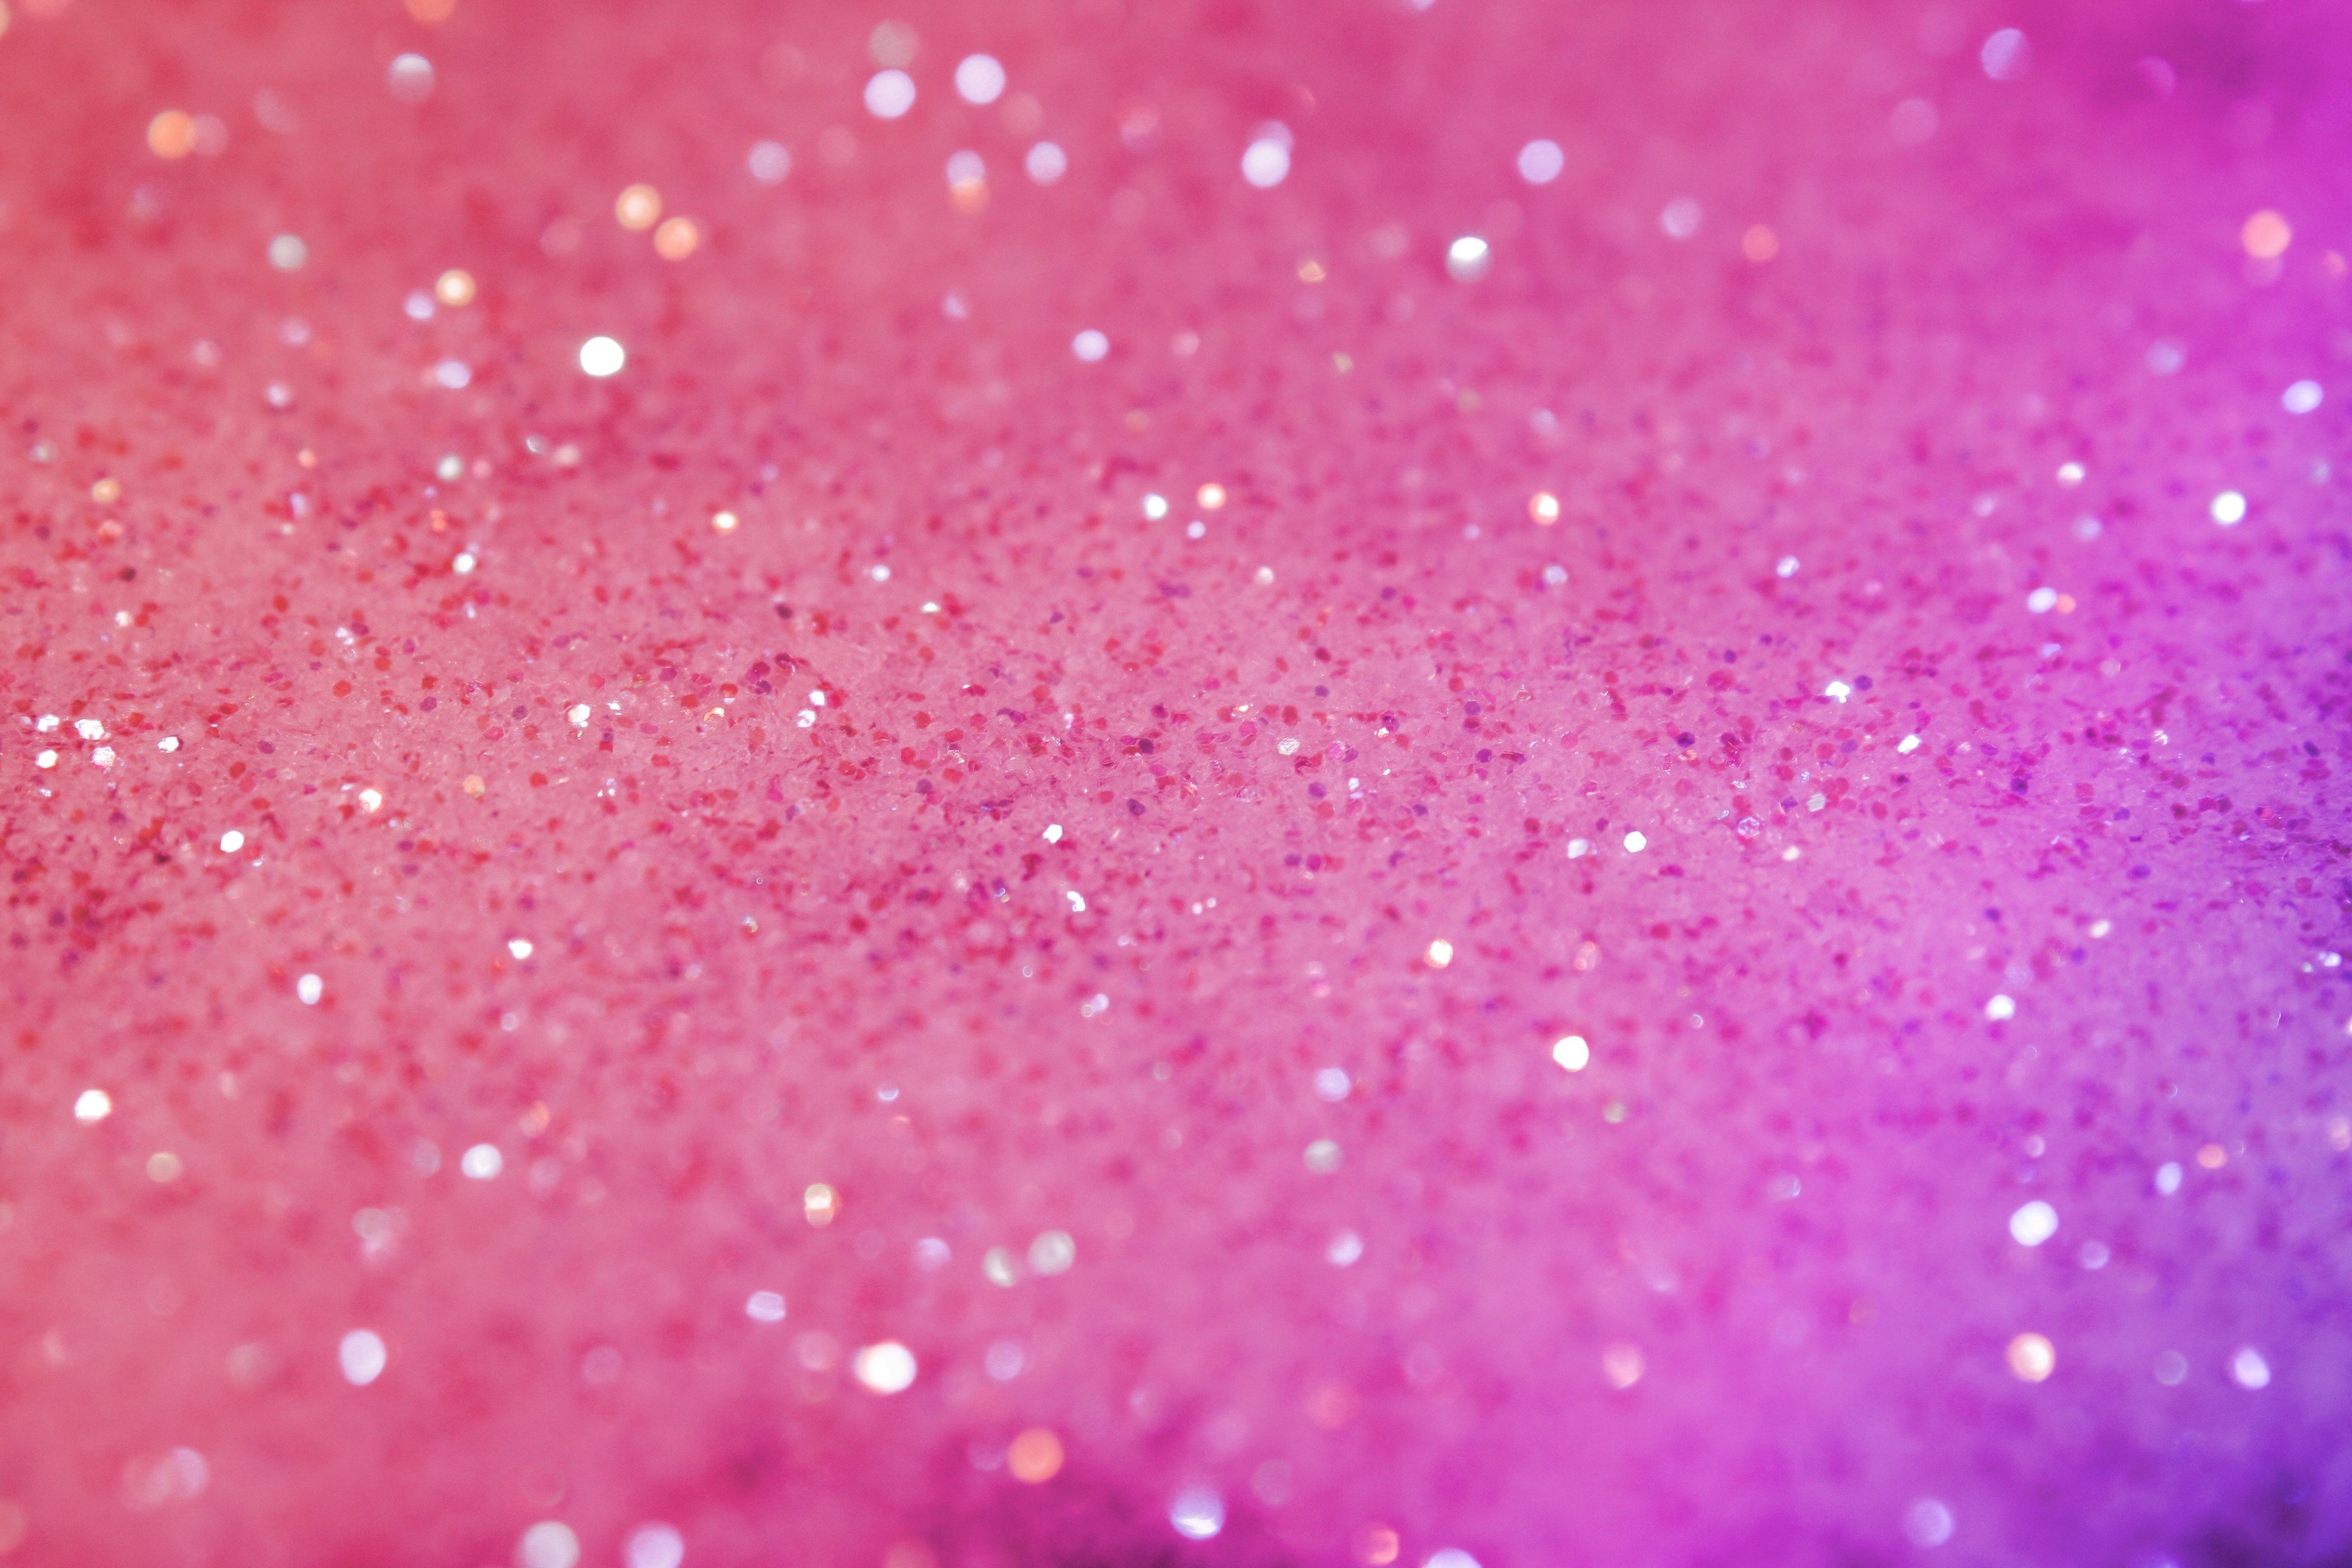 pinkpurple glitter wallpaper Stuff that some people